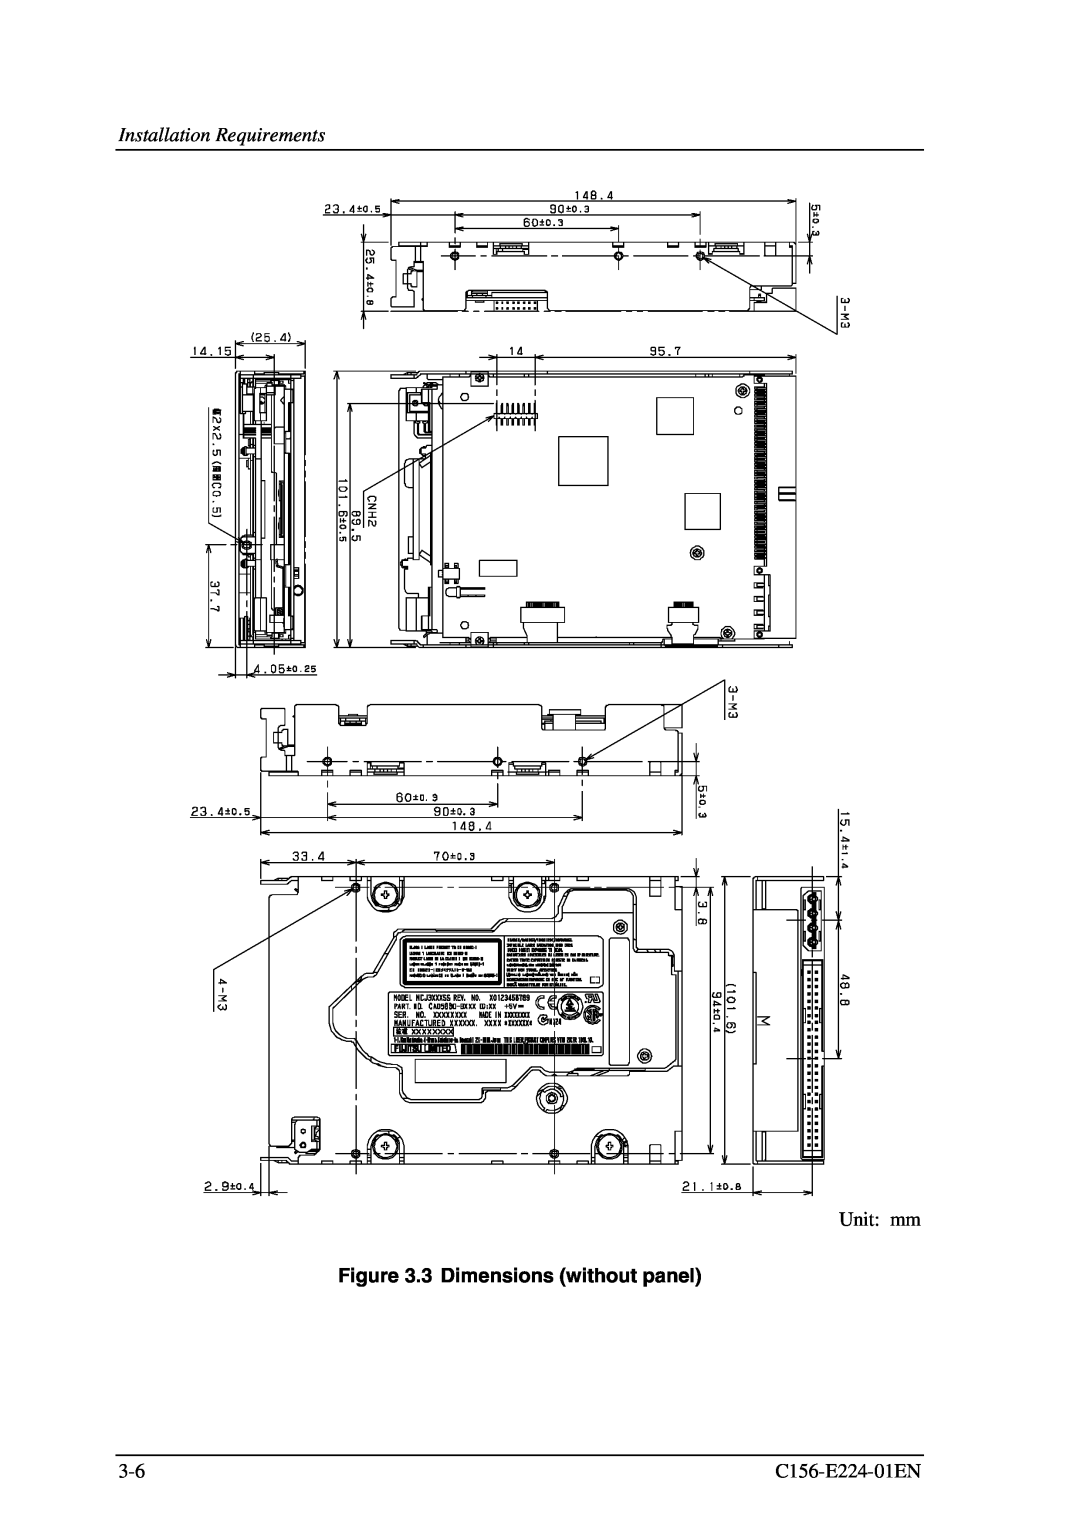 Fujitsu MCJ3230SS manual 3 Dimensions without panel, Unit mm, C156-E224-01EN 